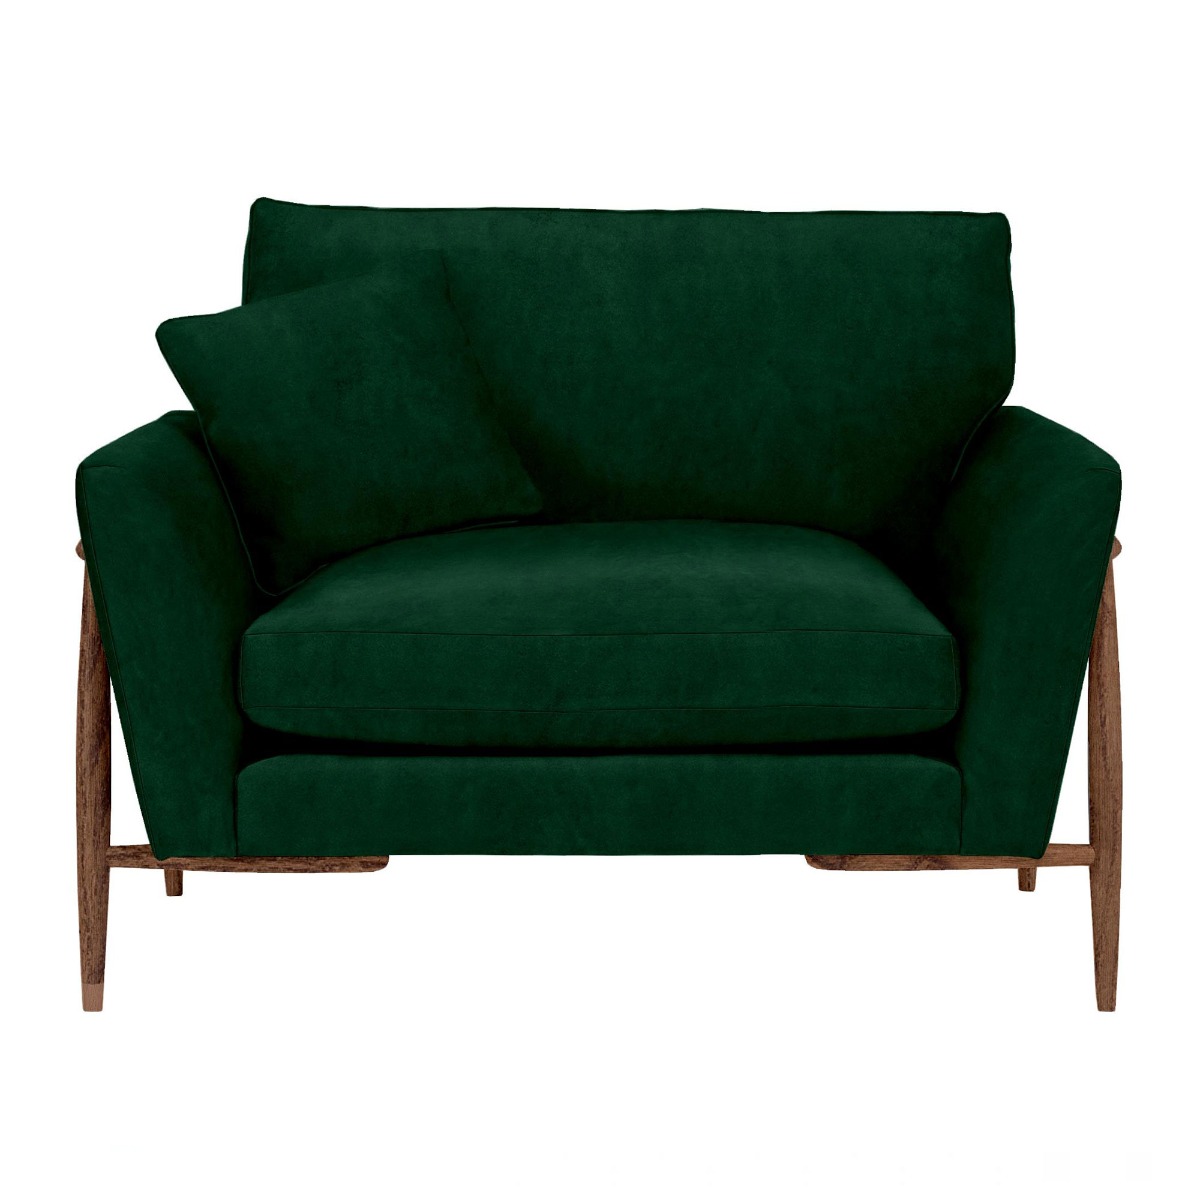 Ercol Forli Armchair, Green Fabric | Barker & Stonehouse